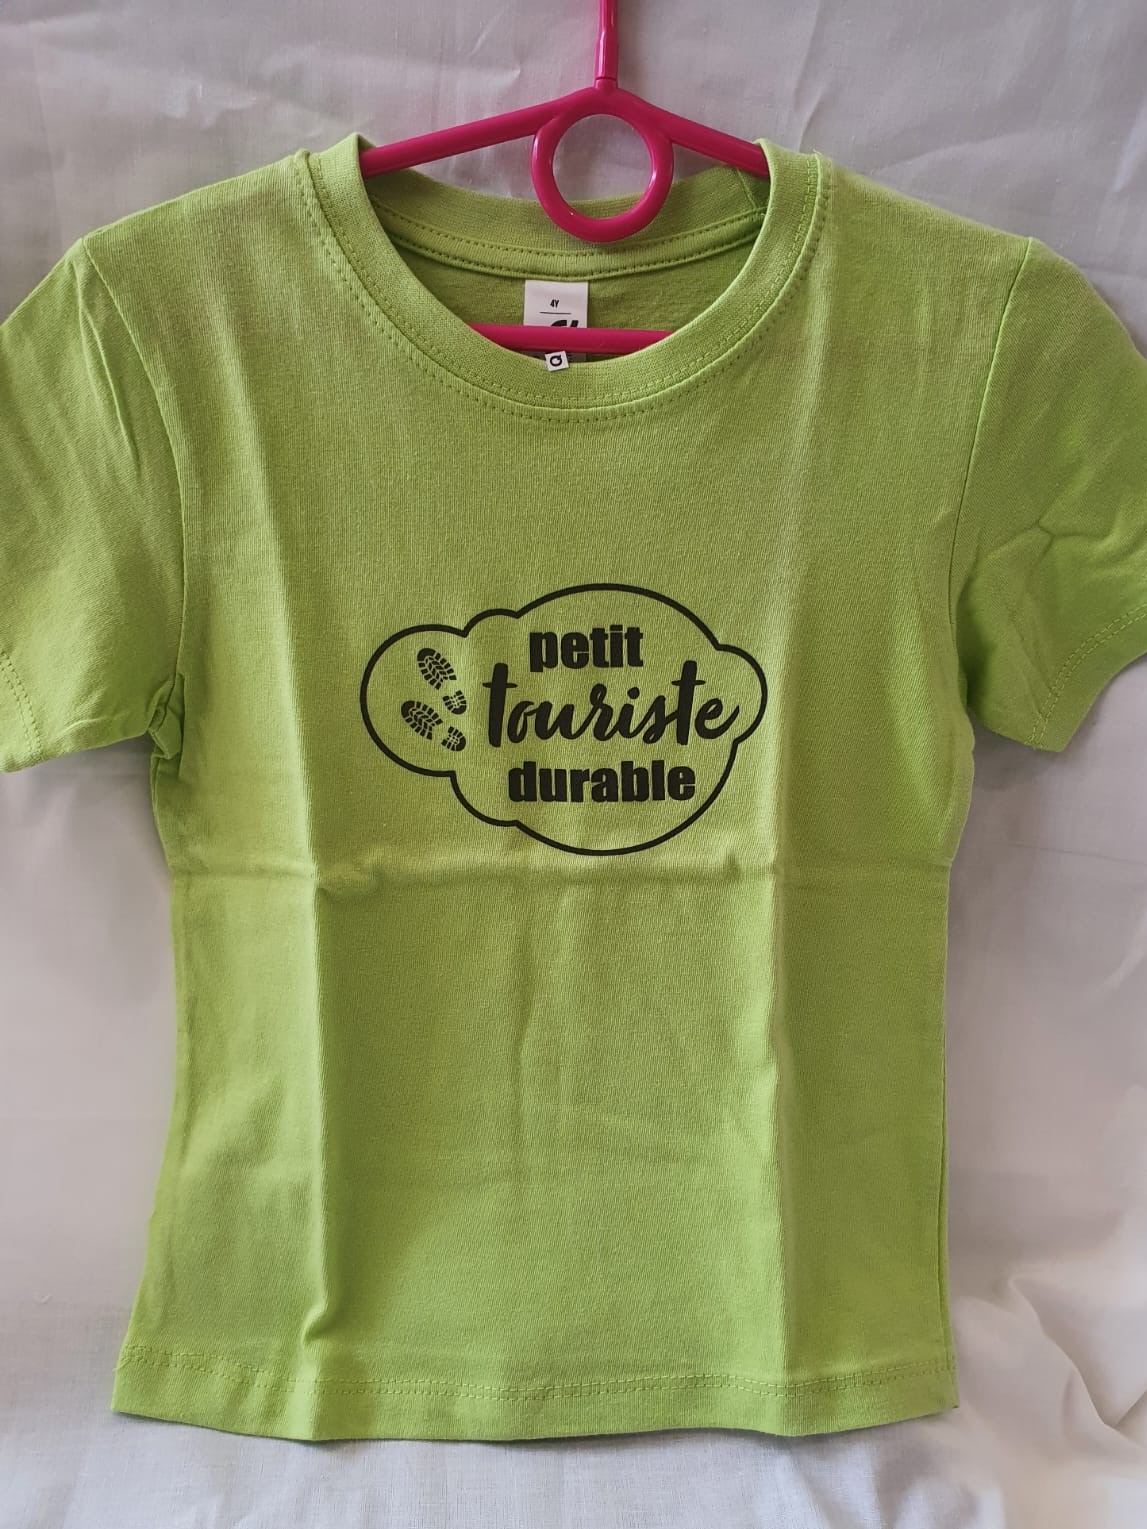 Tee-shirt enfant “Petit touriste durable” vert